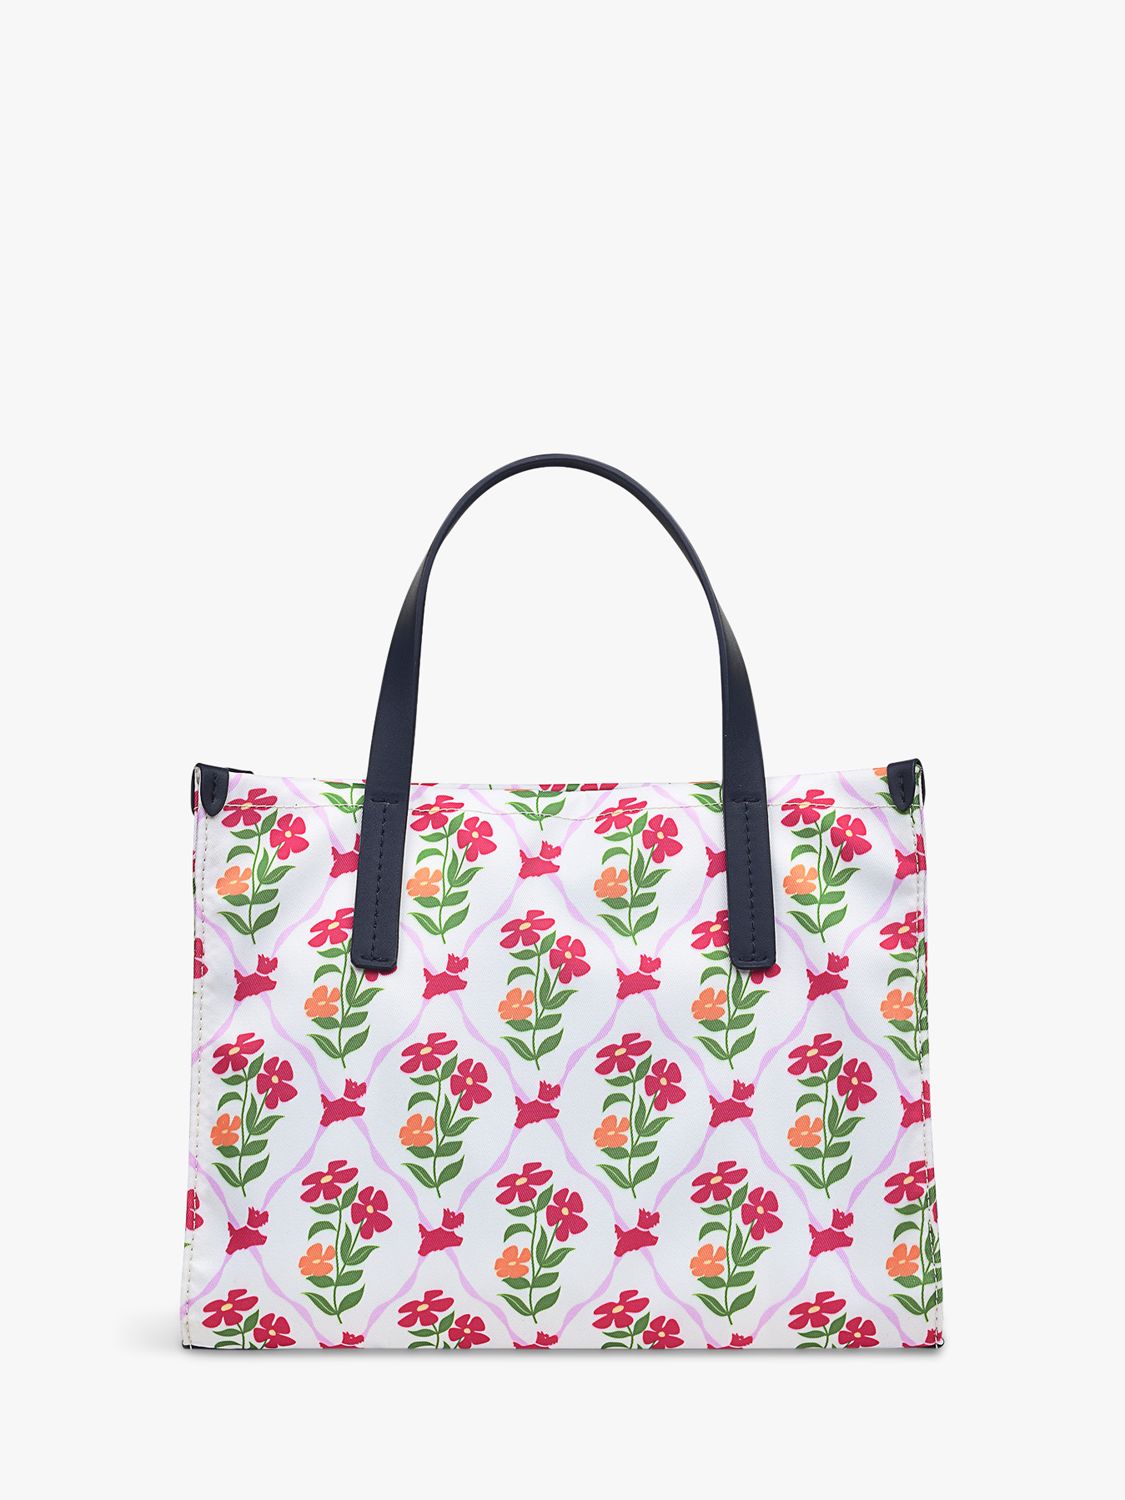 Radley Carousel Floral Print Tote Bag, Chalk/Multi, One Size